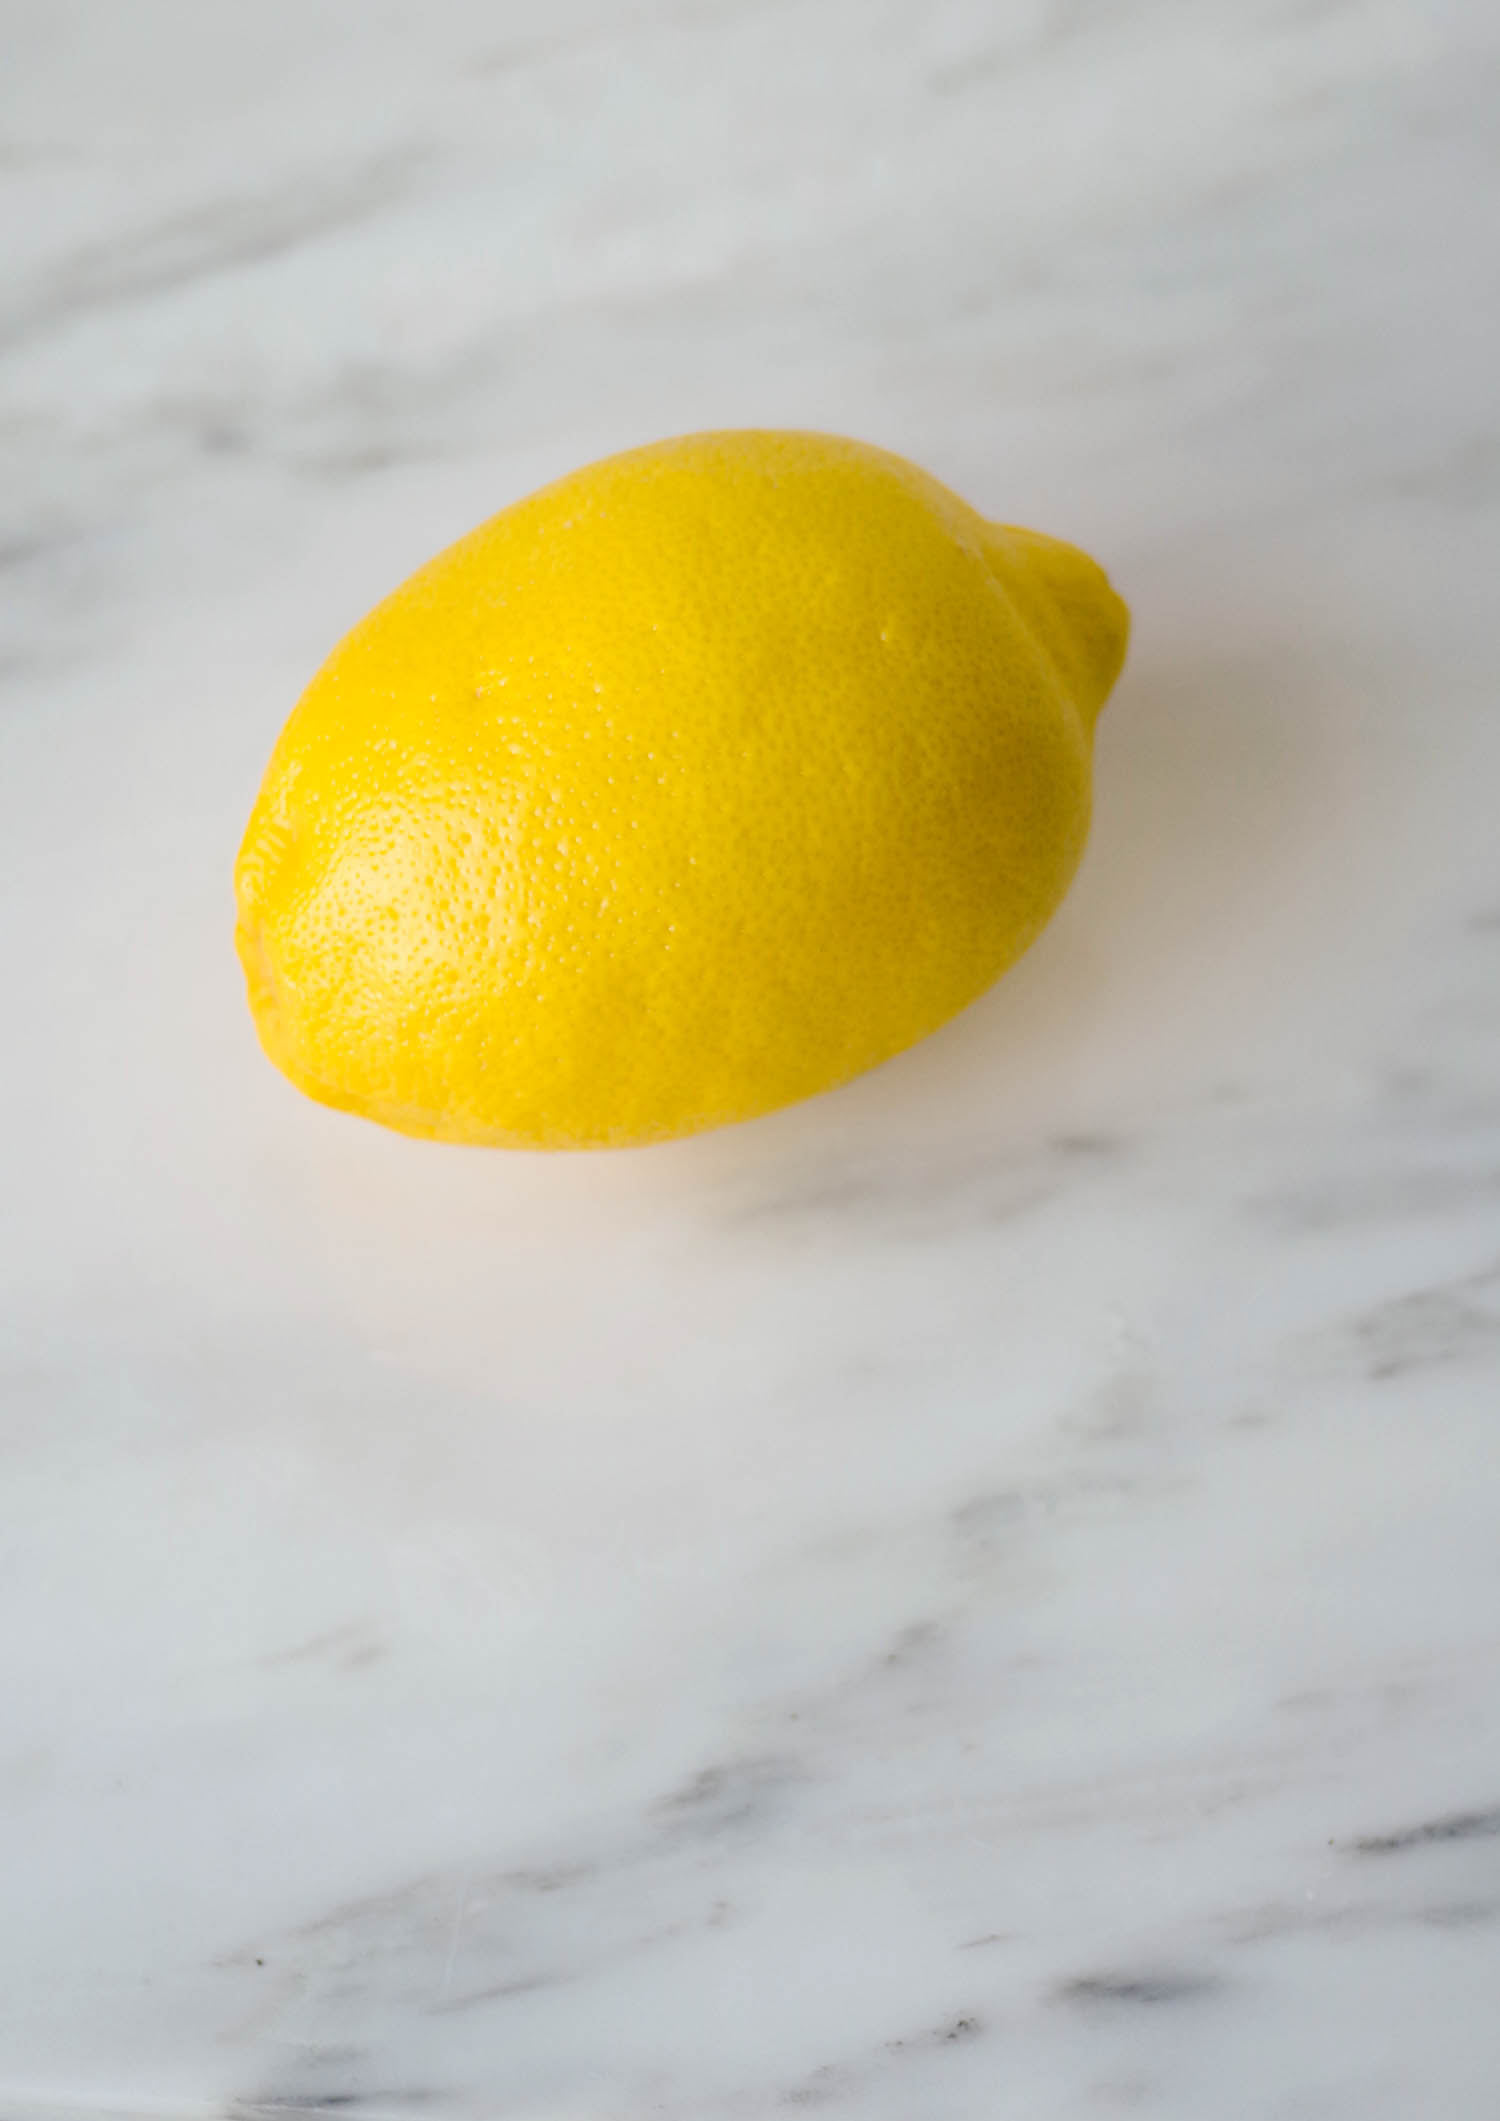 Lemony goodness.